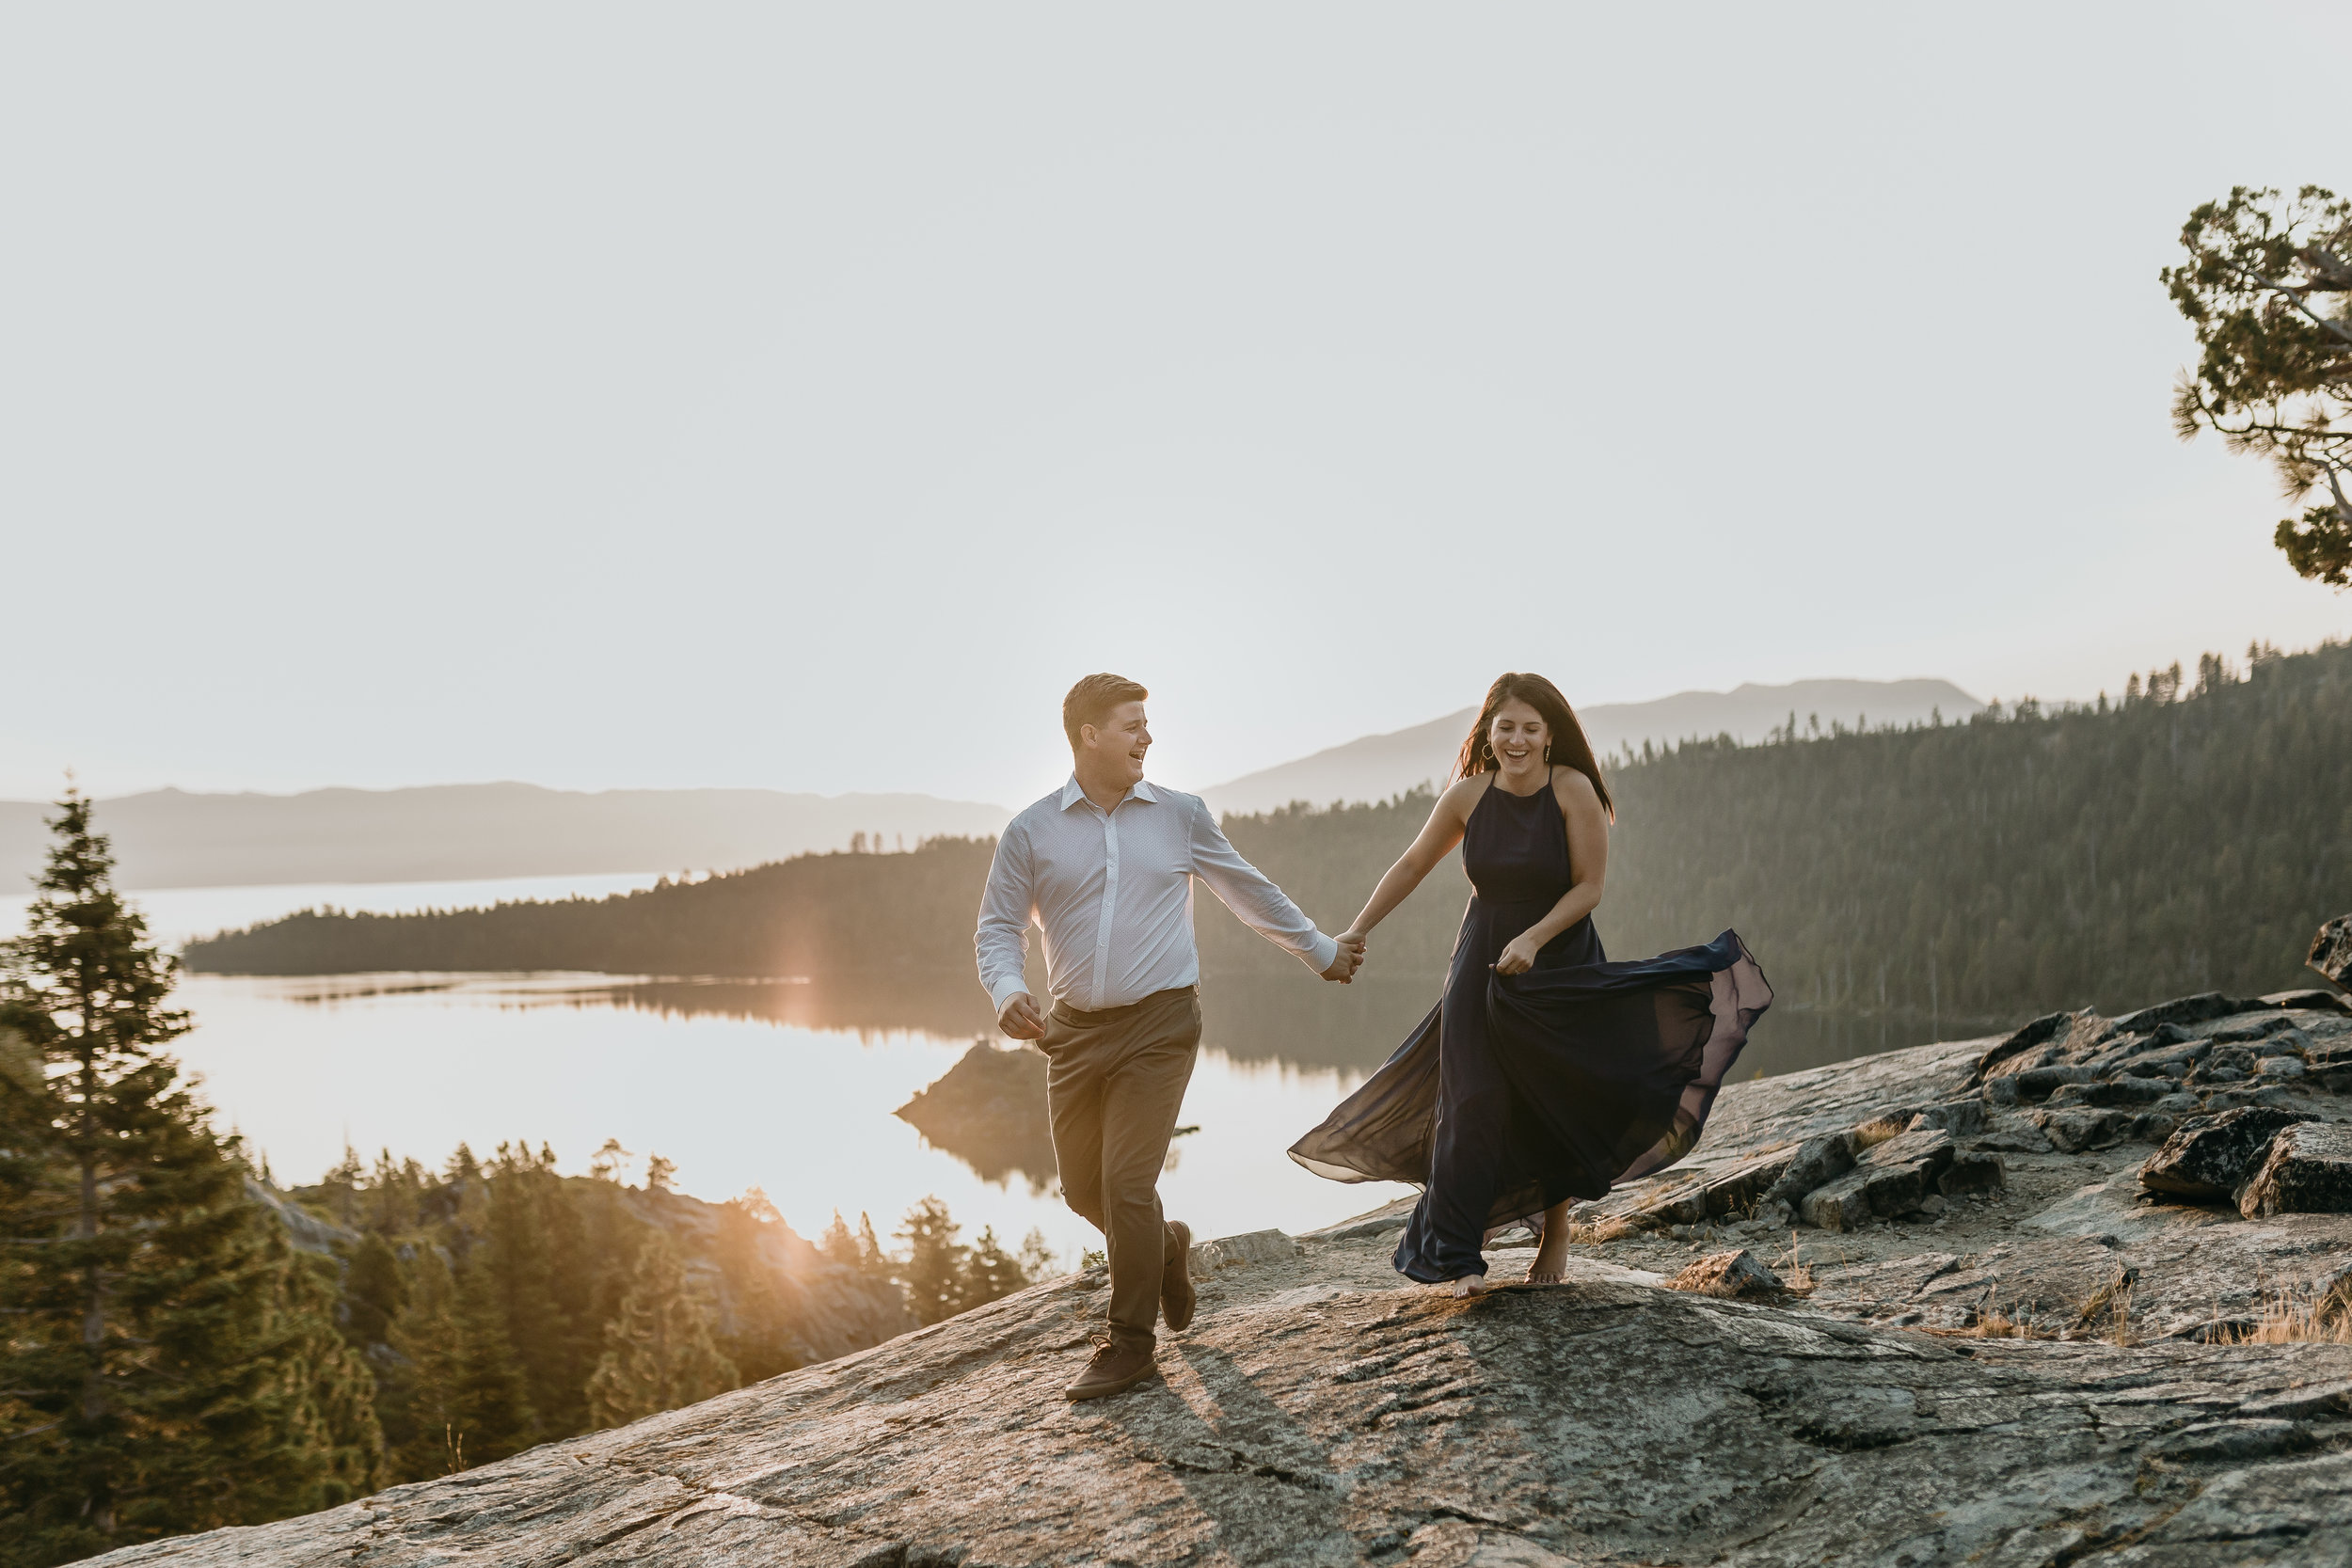 nicole-daacke-photography-lake-tahoe-sunrise-summer-adventure-engagement-photos-nevada-wedding-elopement-photographer-golden-emerald-bay-light-pine-trees-summer-vibe-fun-carefree-authentic-love-24.jpg